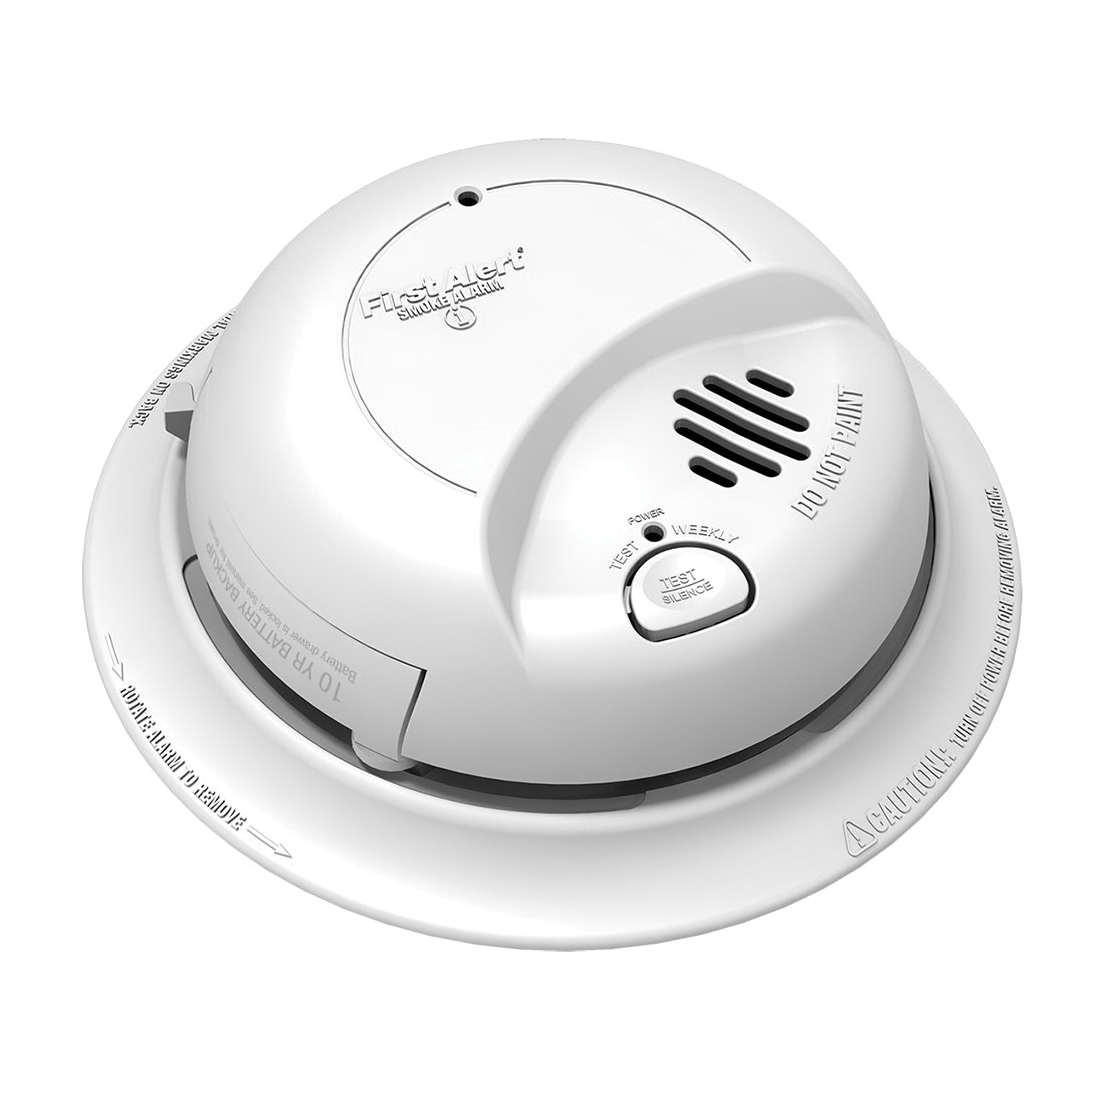 9120LBL Smoke Alarm, Ionization Sensor, 85 dB, White